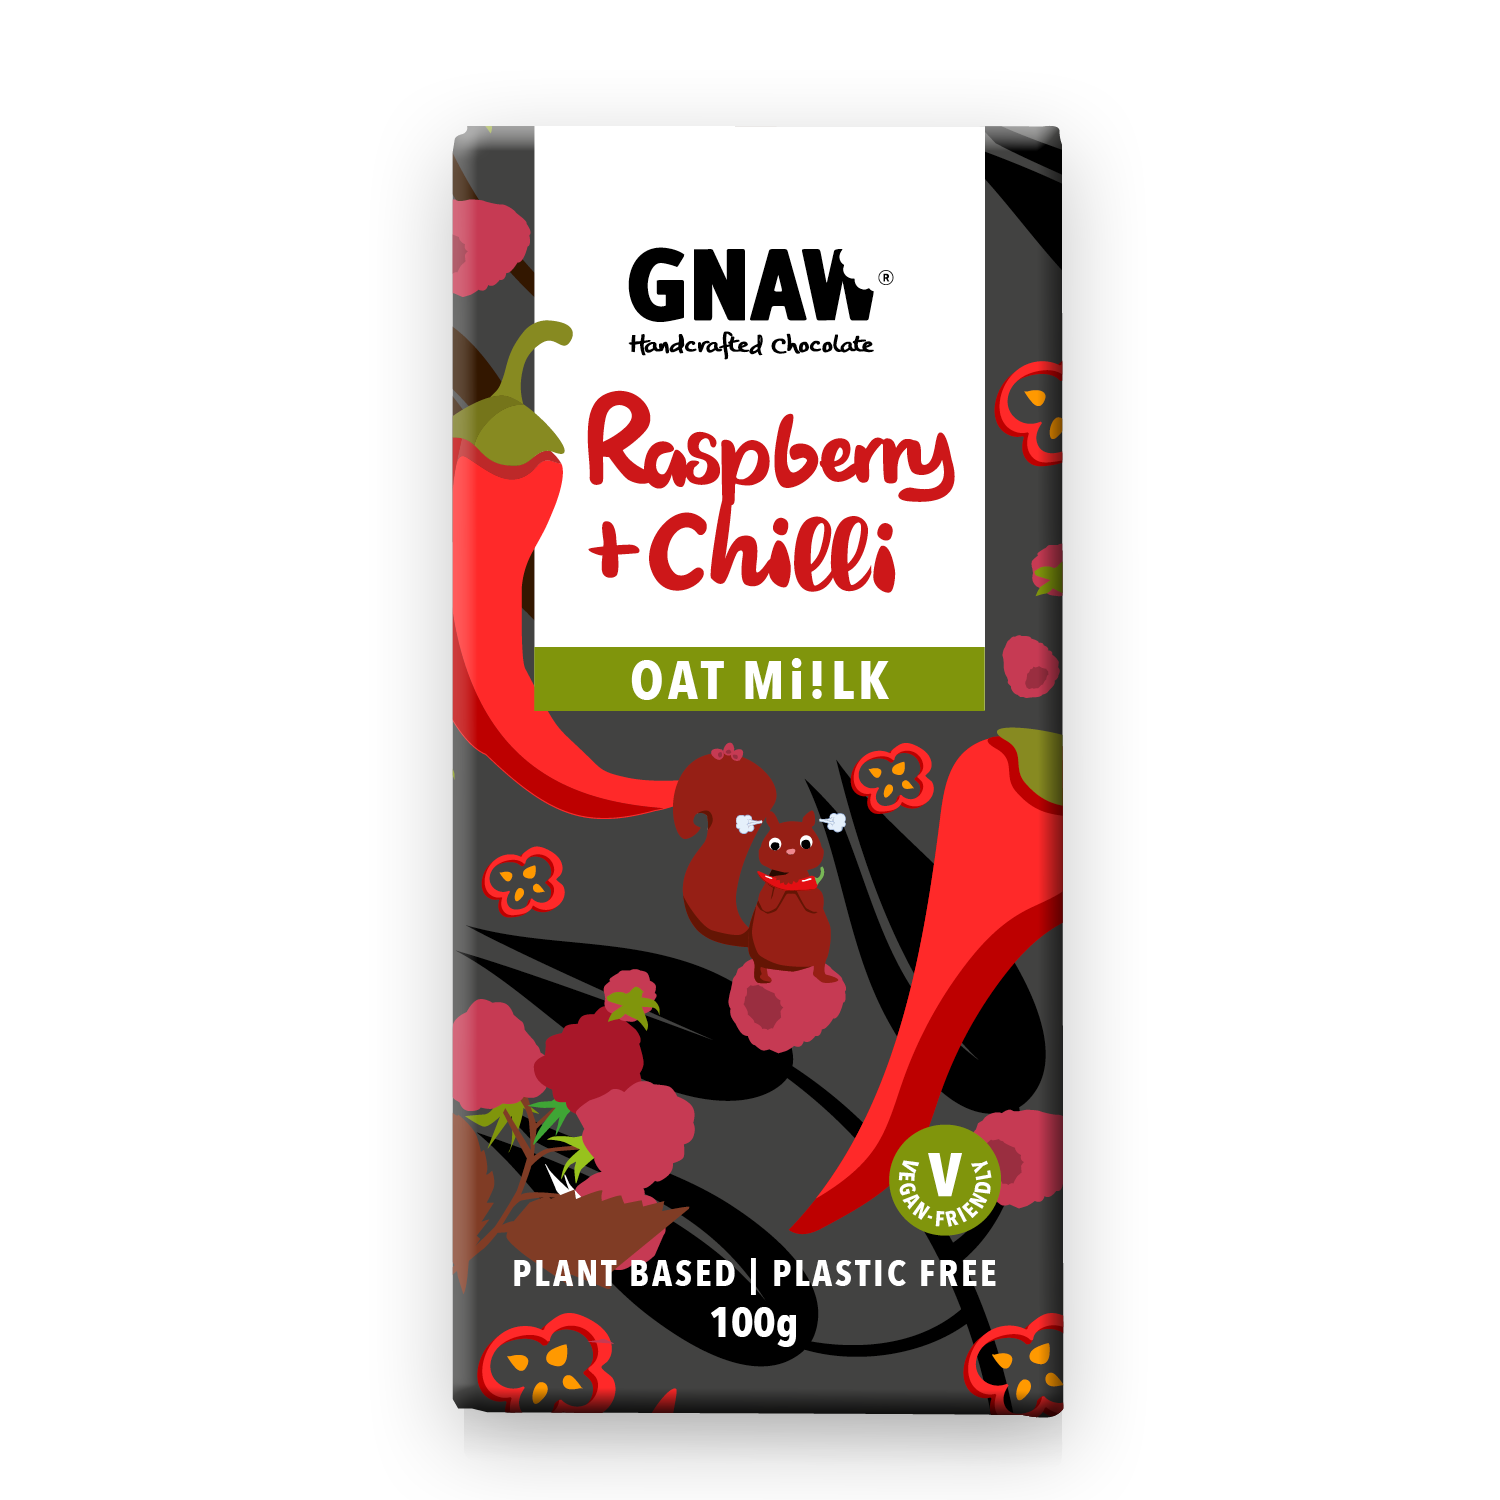 Gnaw Raspberry & Chilli Oat M!lk Chocolate Bar (100g)